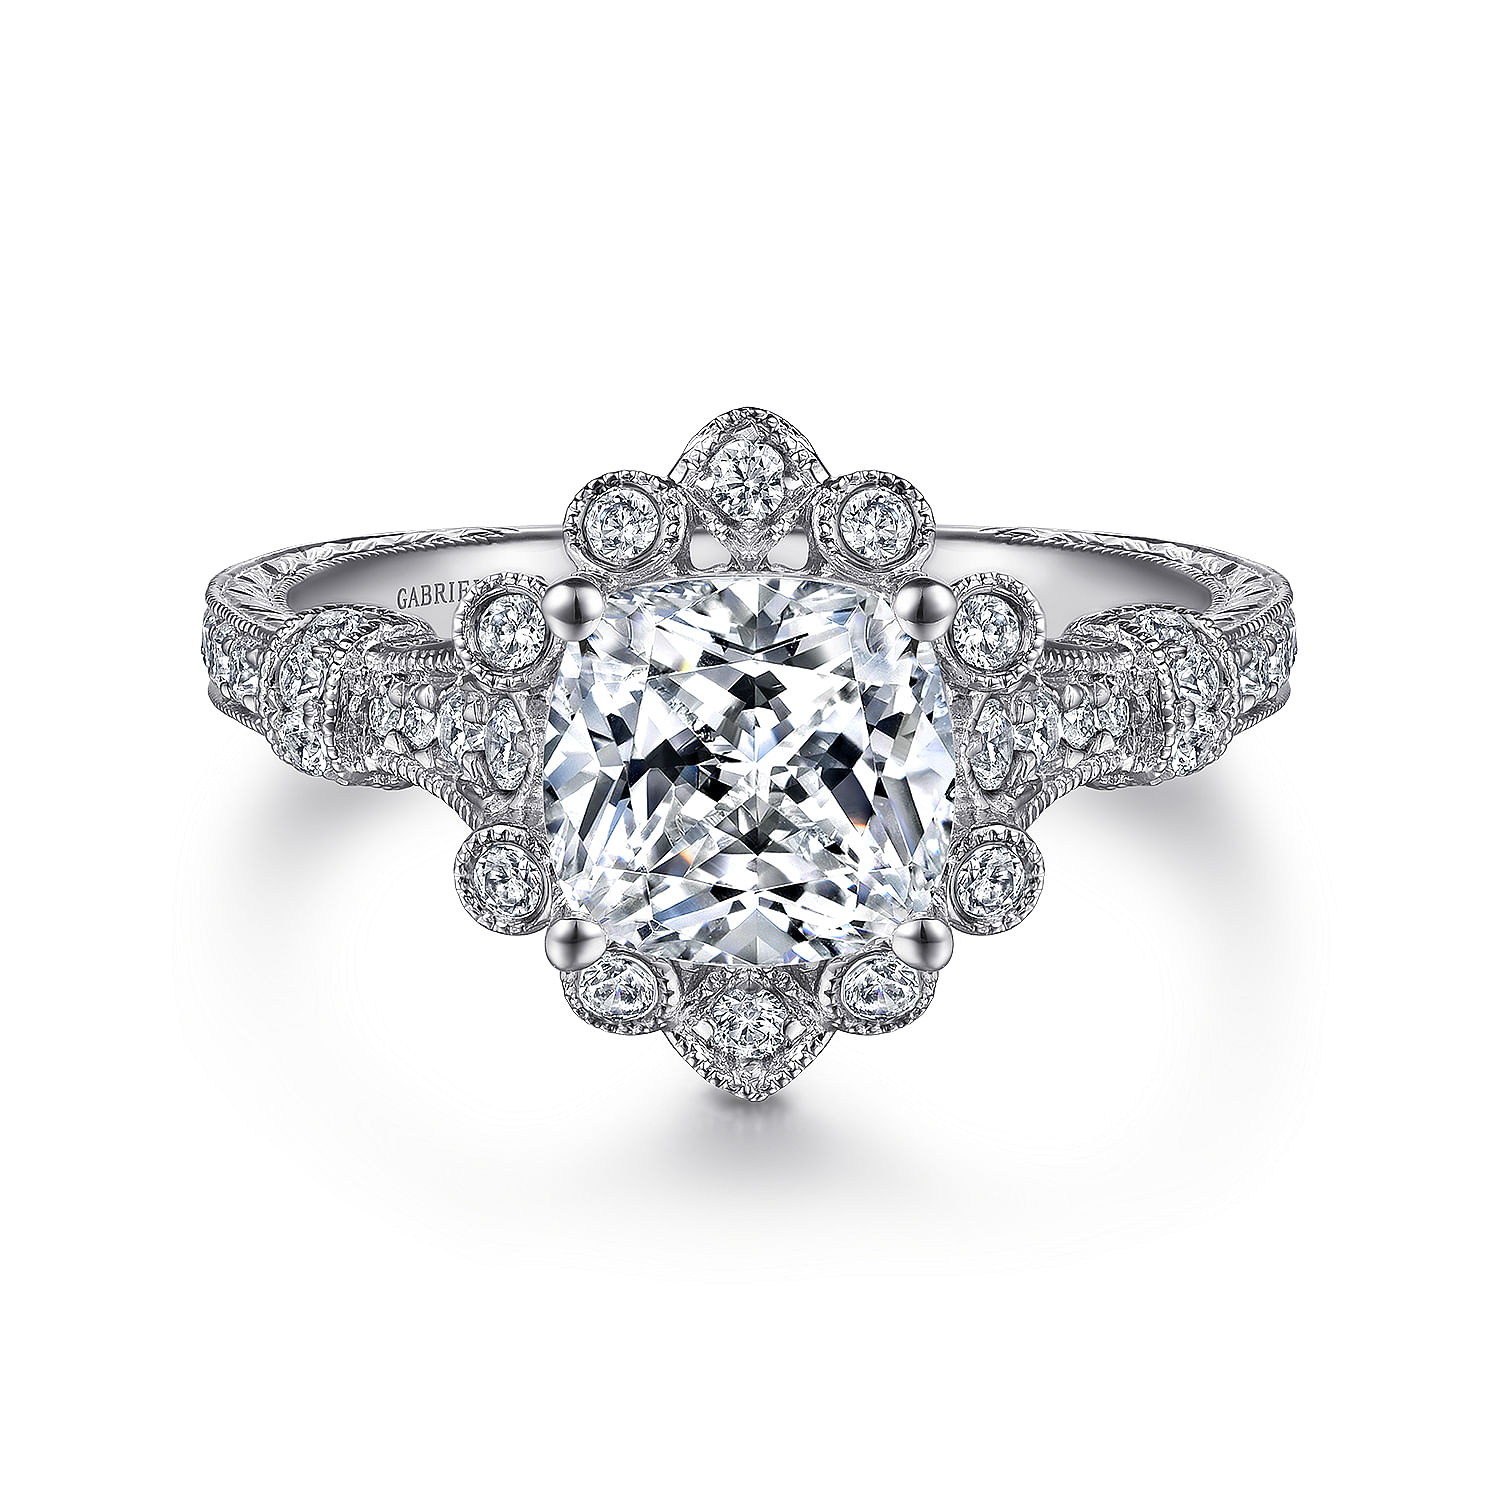 Calliope - Unique 14K White Gold Vintage Inspired Cushion Cut Halo Diamond Engagement Ring